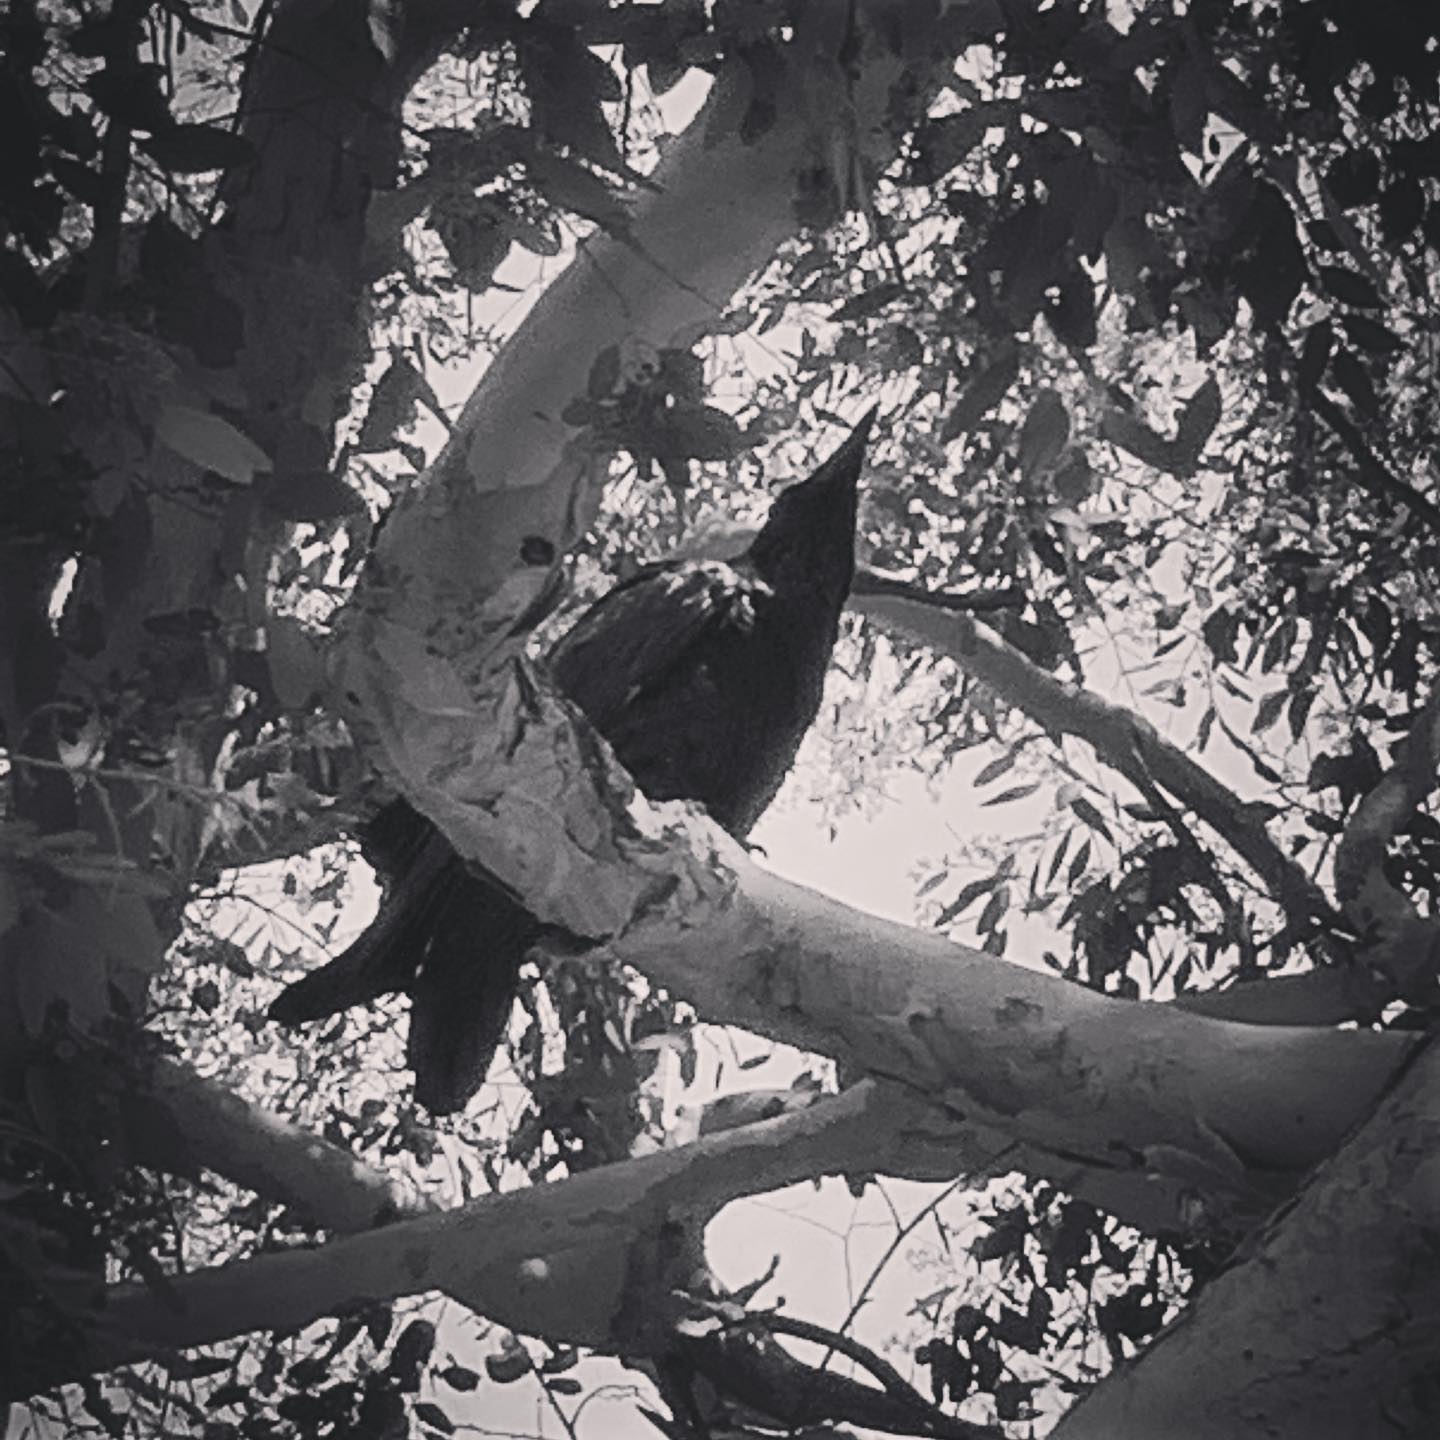 Garden Leaves: Oak (Quercus) – 7 in a series via Instagram [Photo]